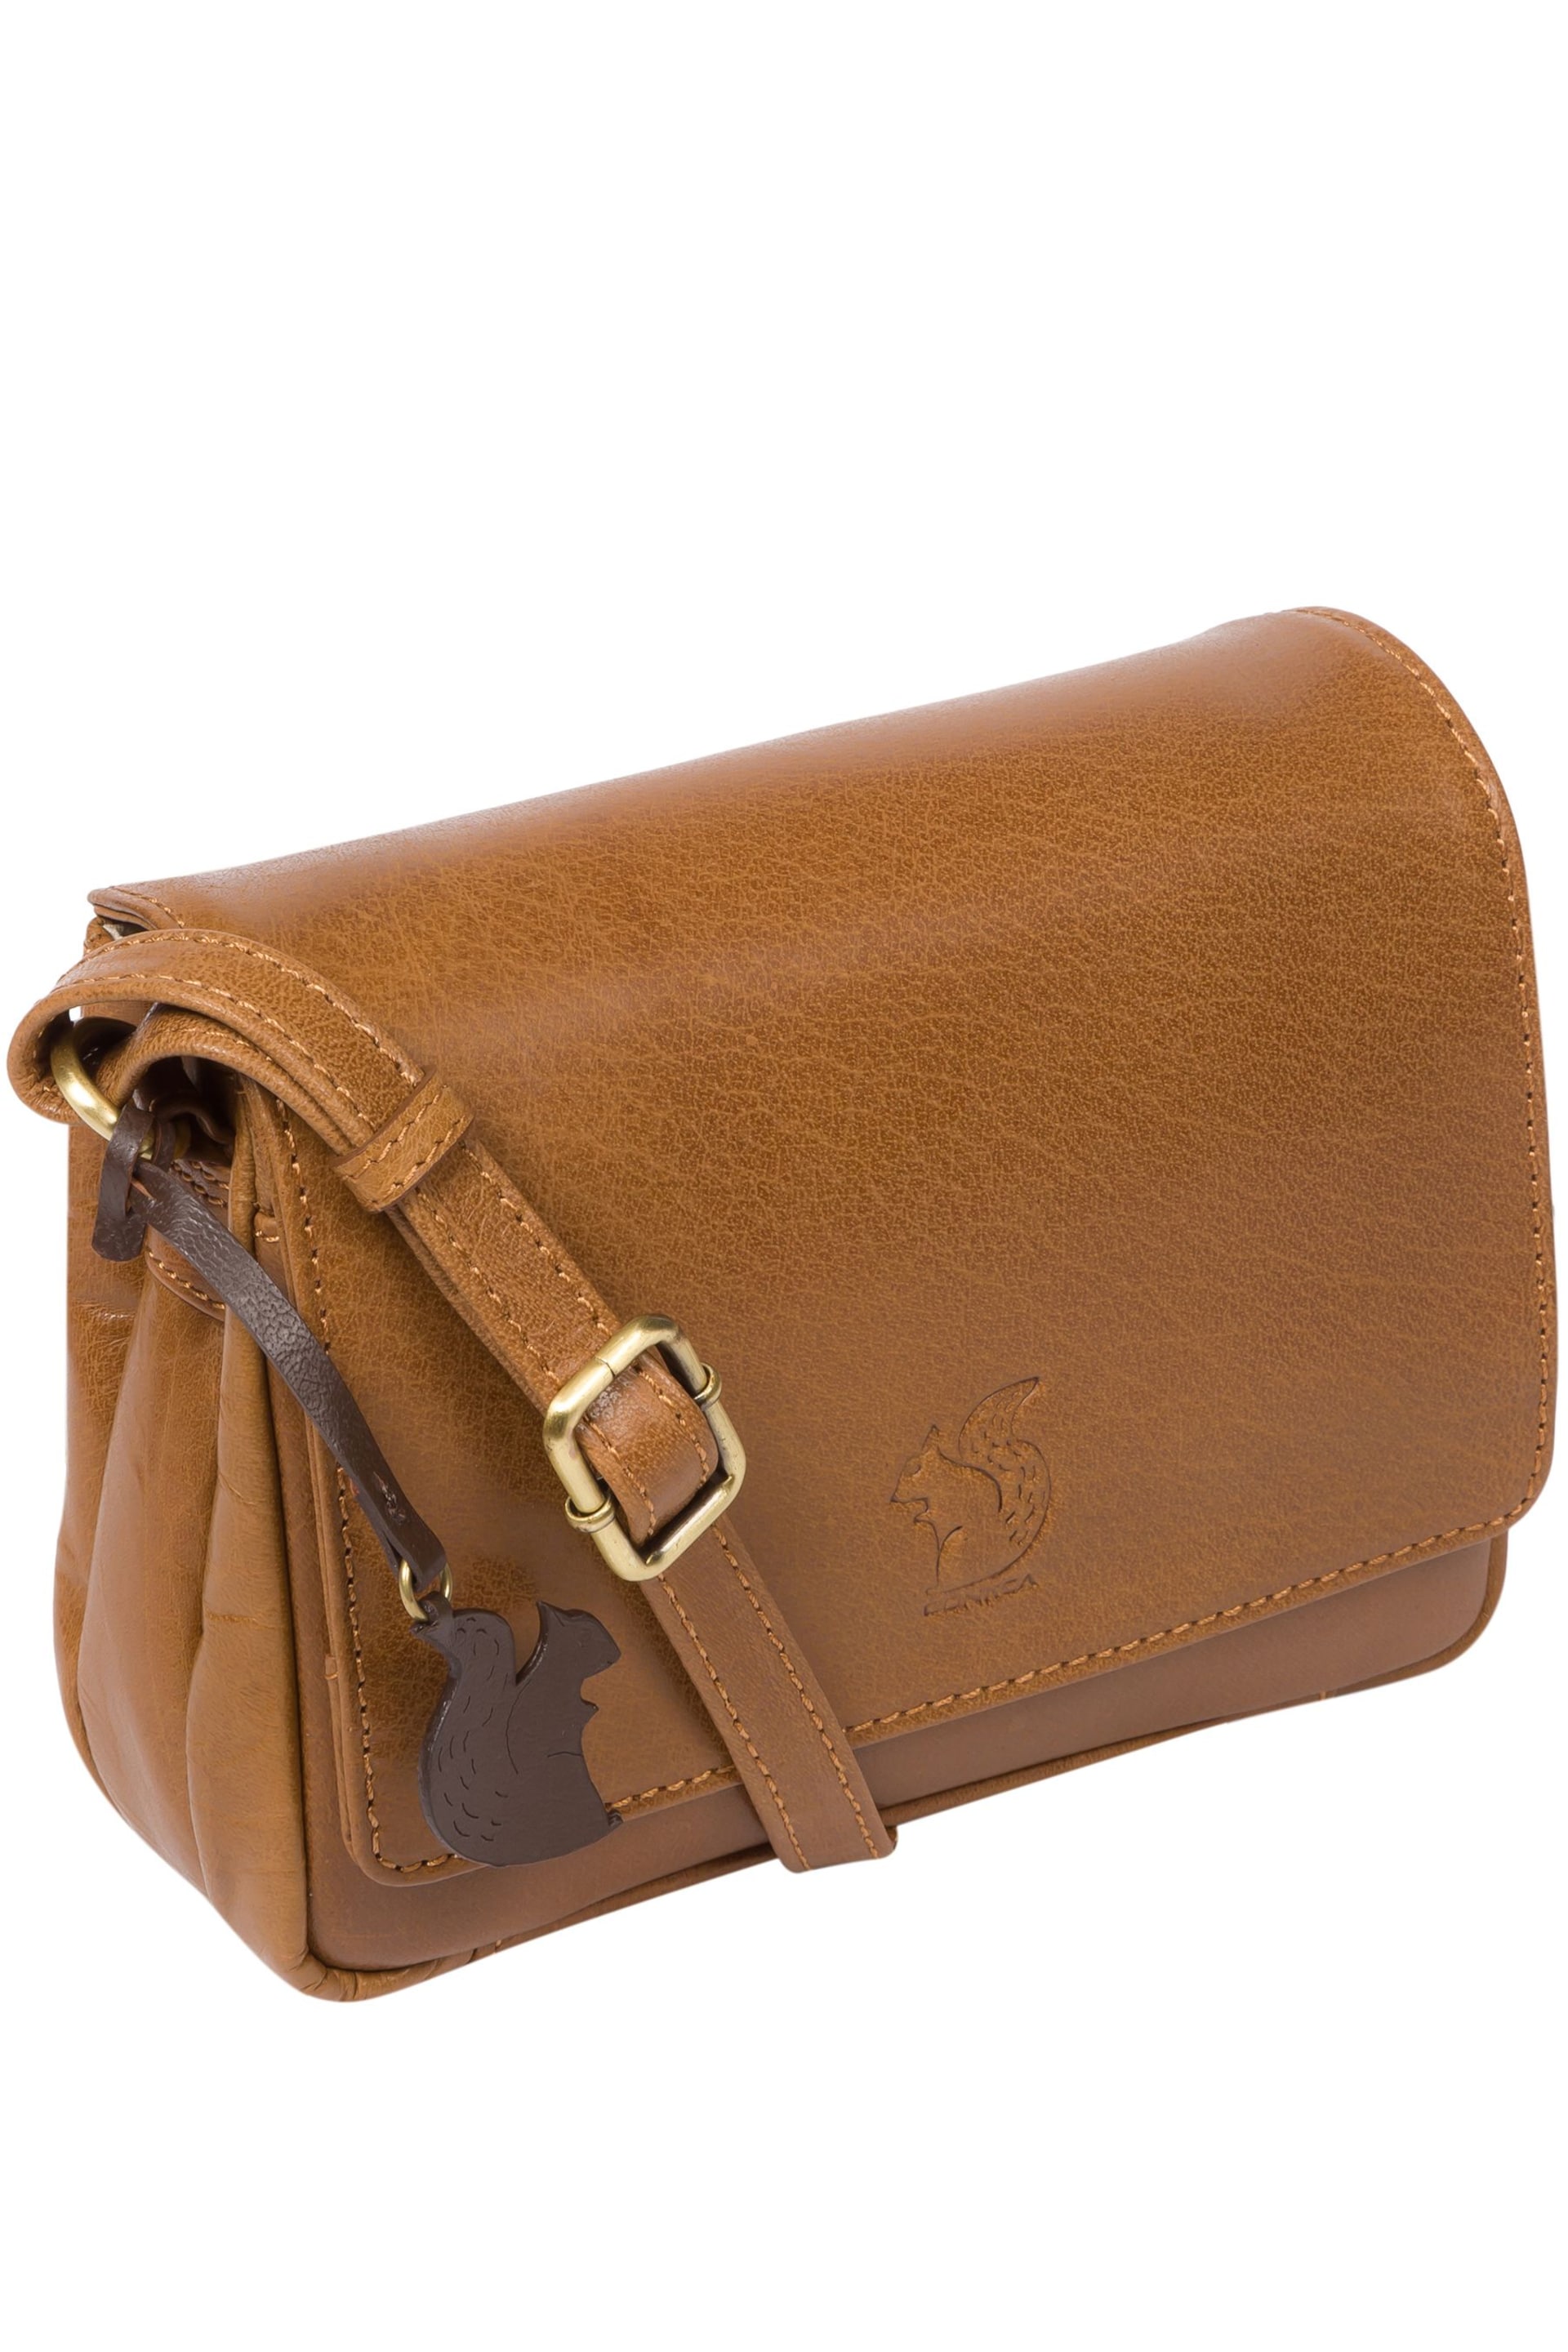 Conkca Marta Leather Cross-Body Bag - Image 3 of 5